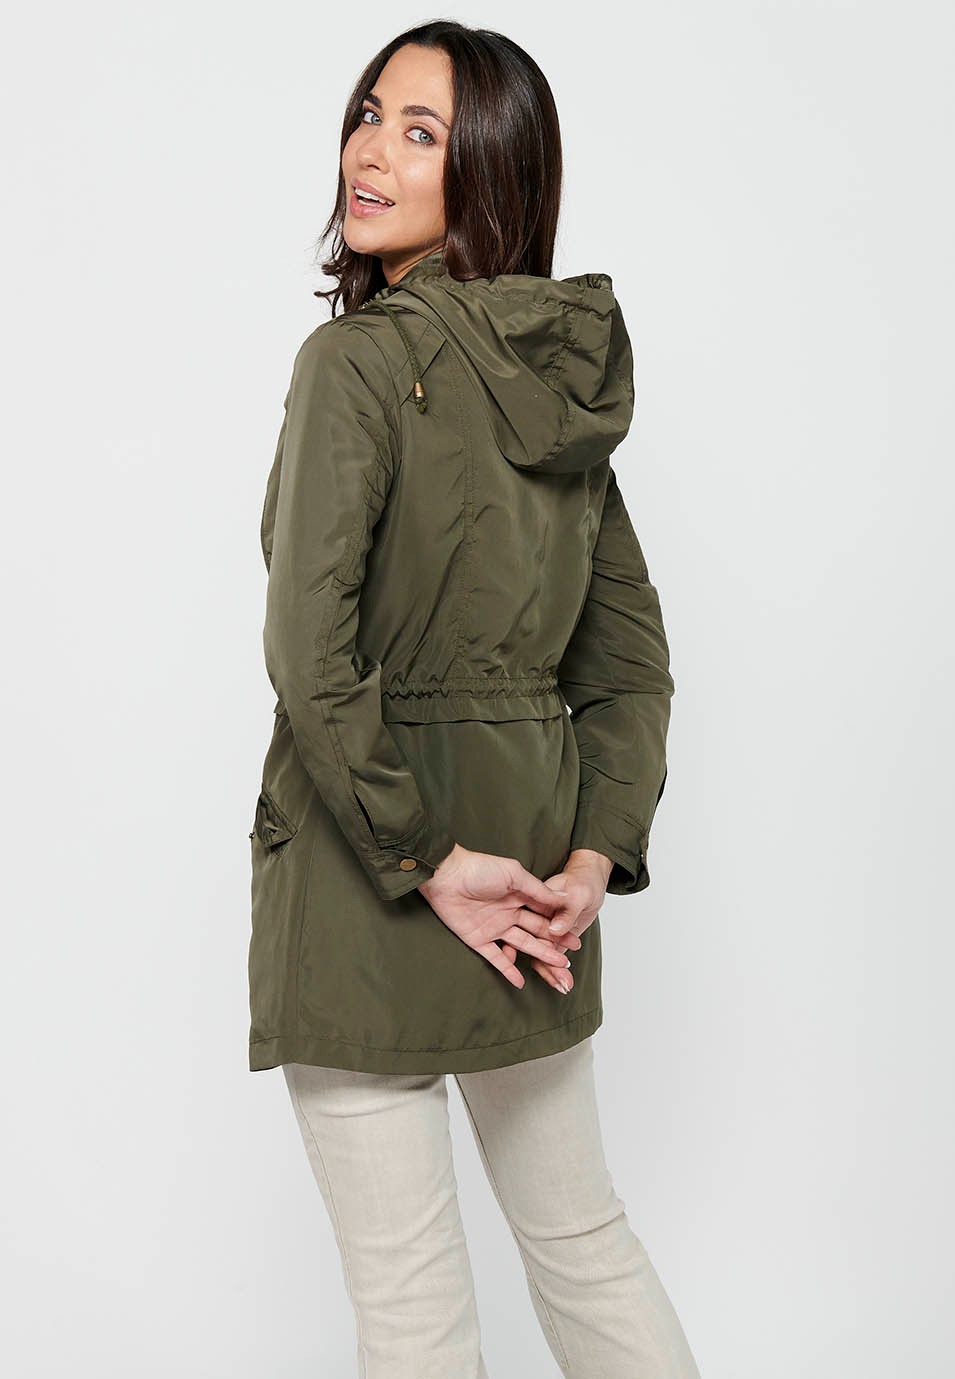 Women's Khaki Long Sleeve Zip Front Hooded Collar Parka Jacket with Pockets 7